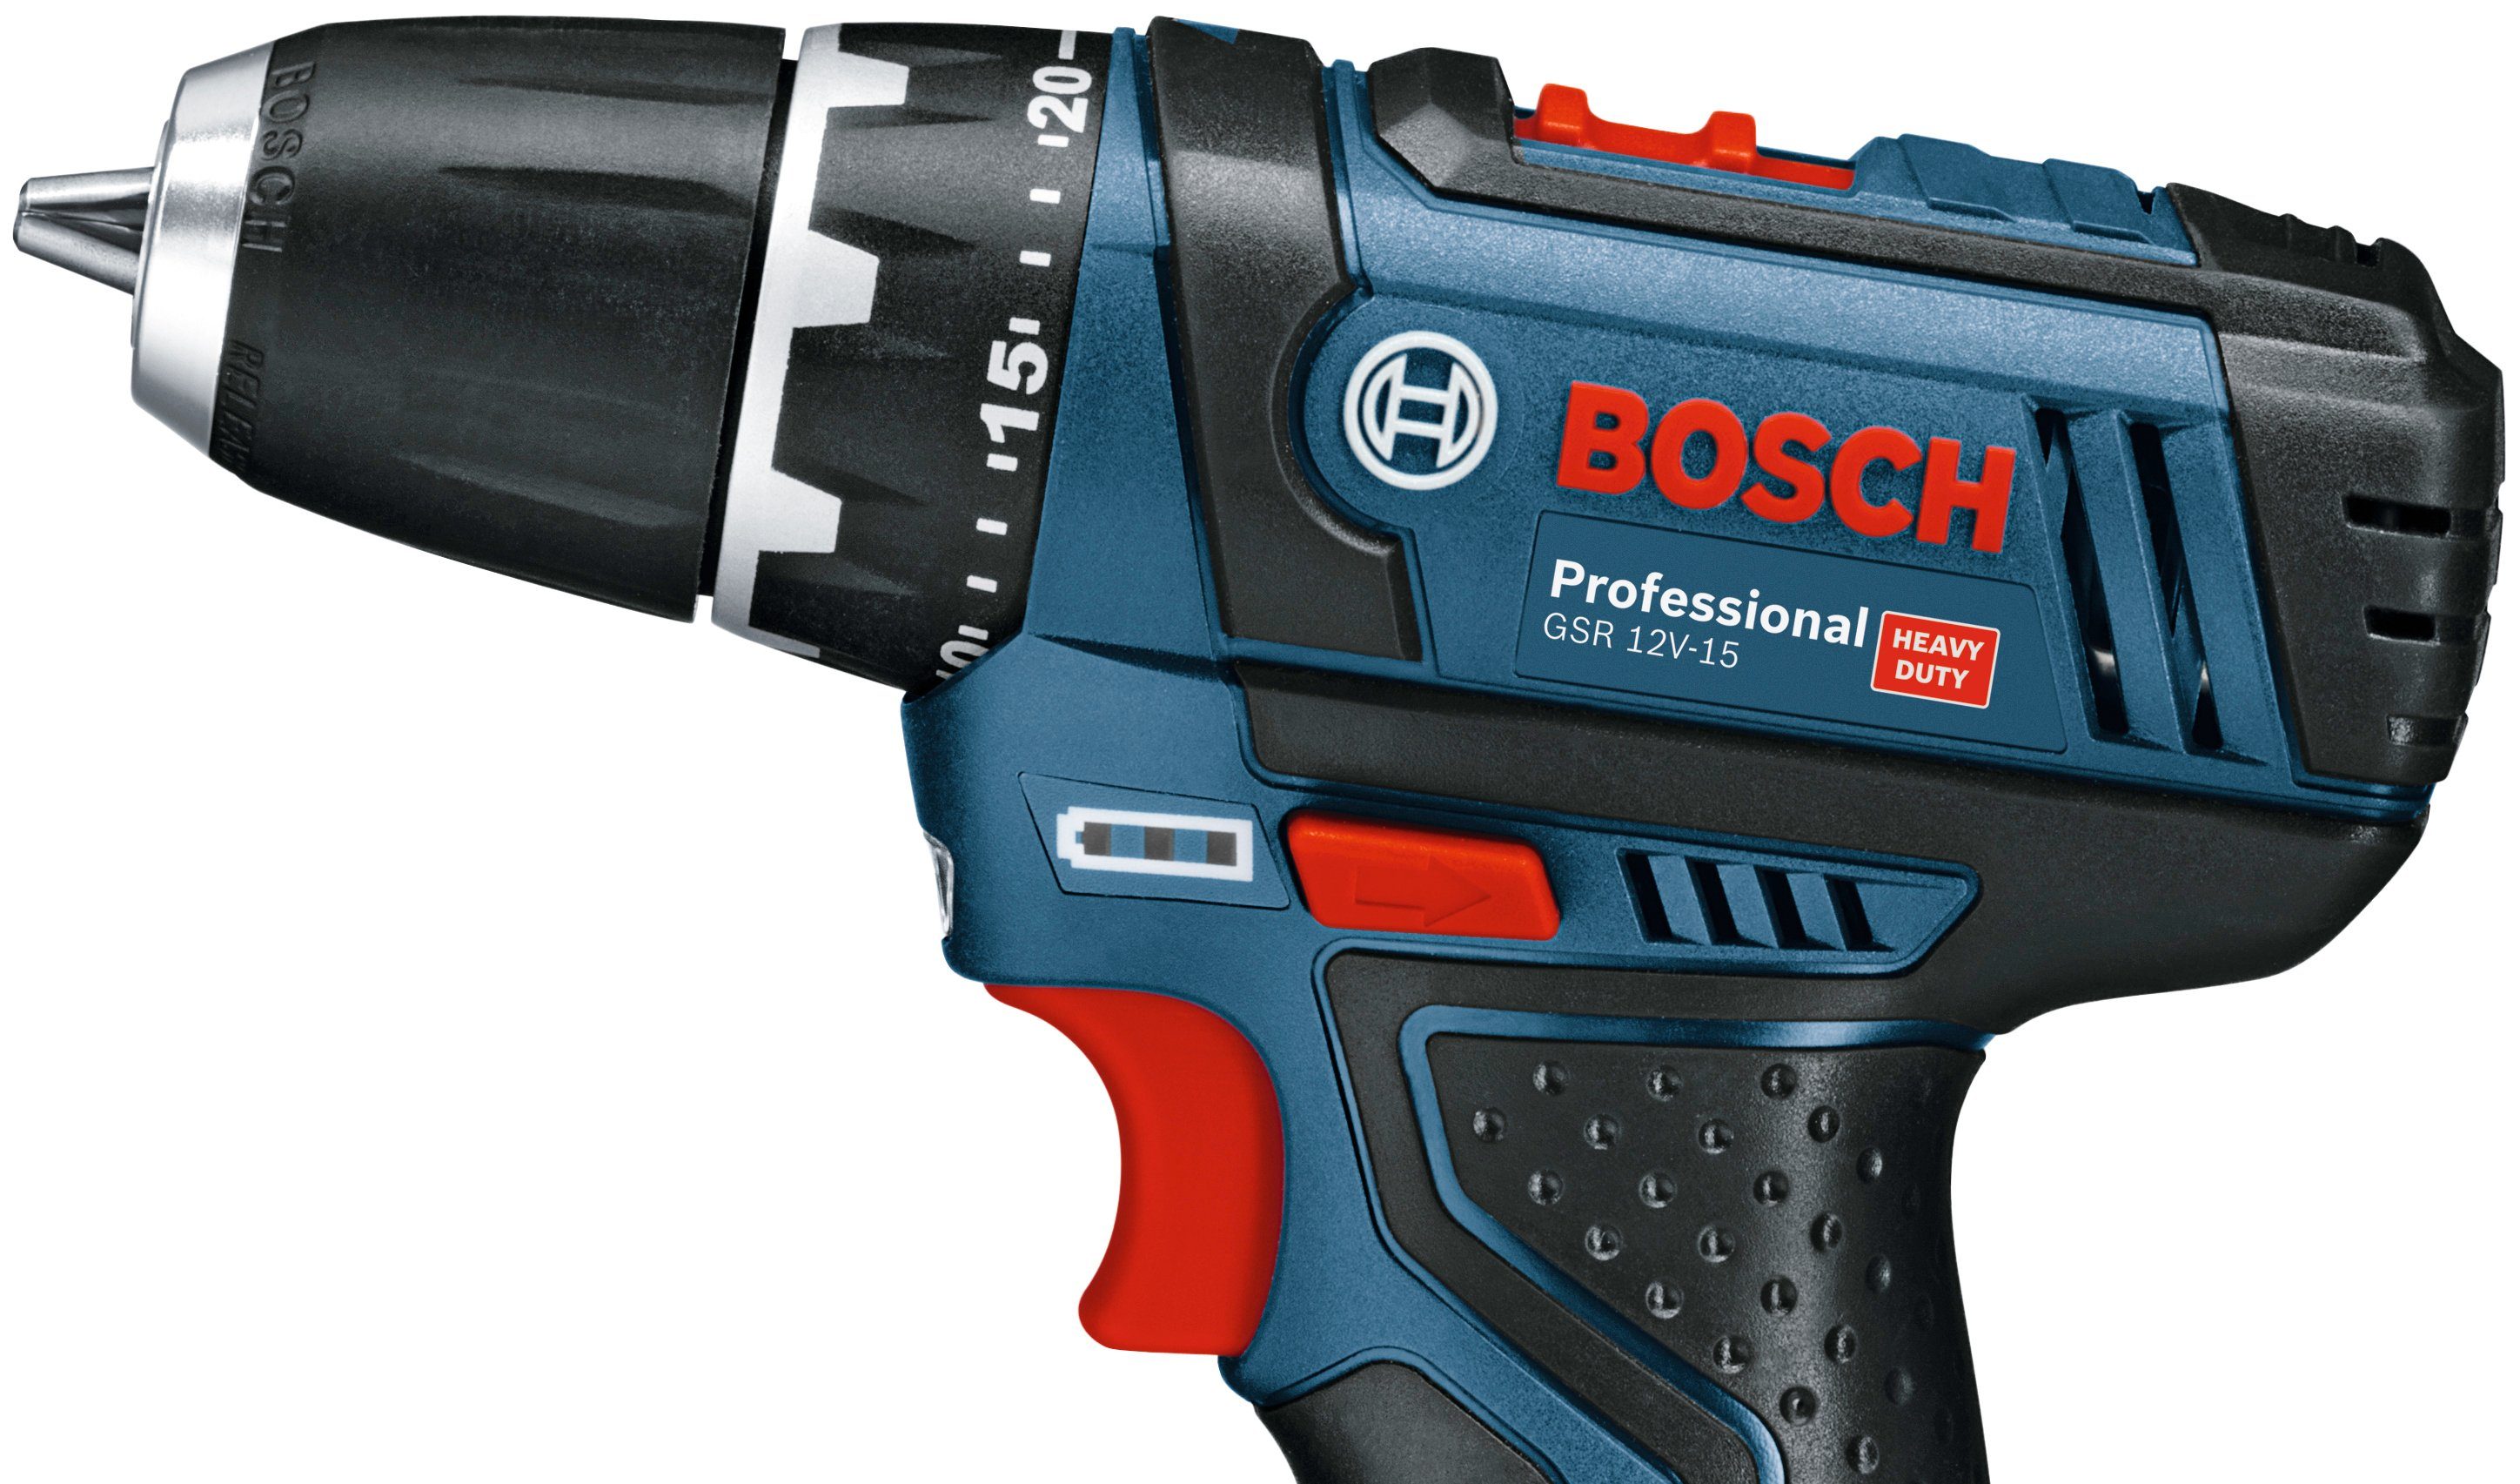 Bosch GSR 10-tlg. Akku, Akku-Bohrschrauber Zubehörset, 12V-15, Ladegerät inkl.2 Professional und Koffer